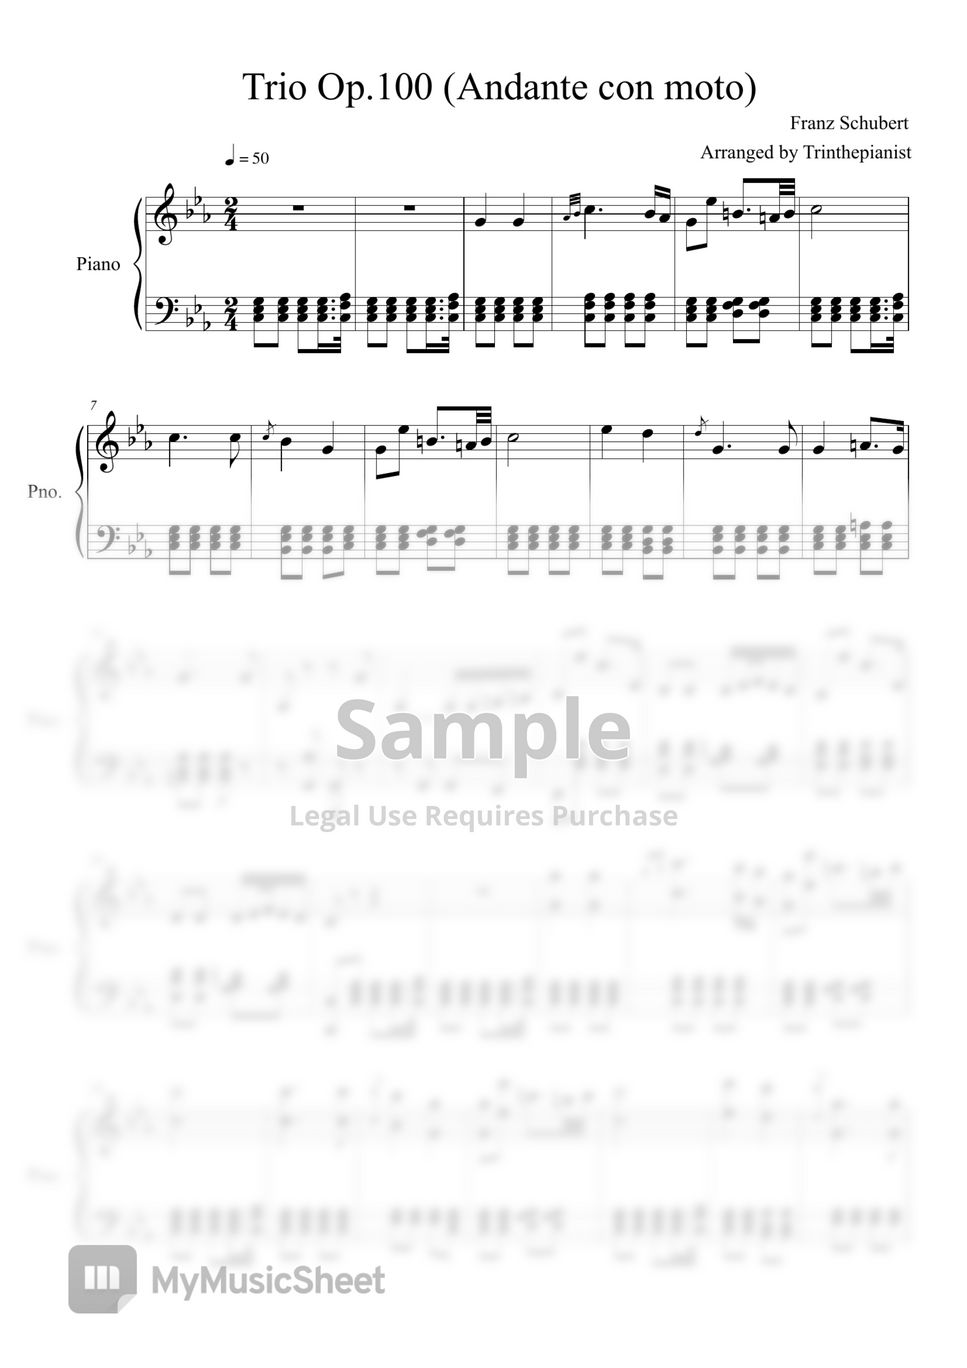 F. Schubert - Trio nº2 op.100, Andante con moto by Trinthepianist